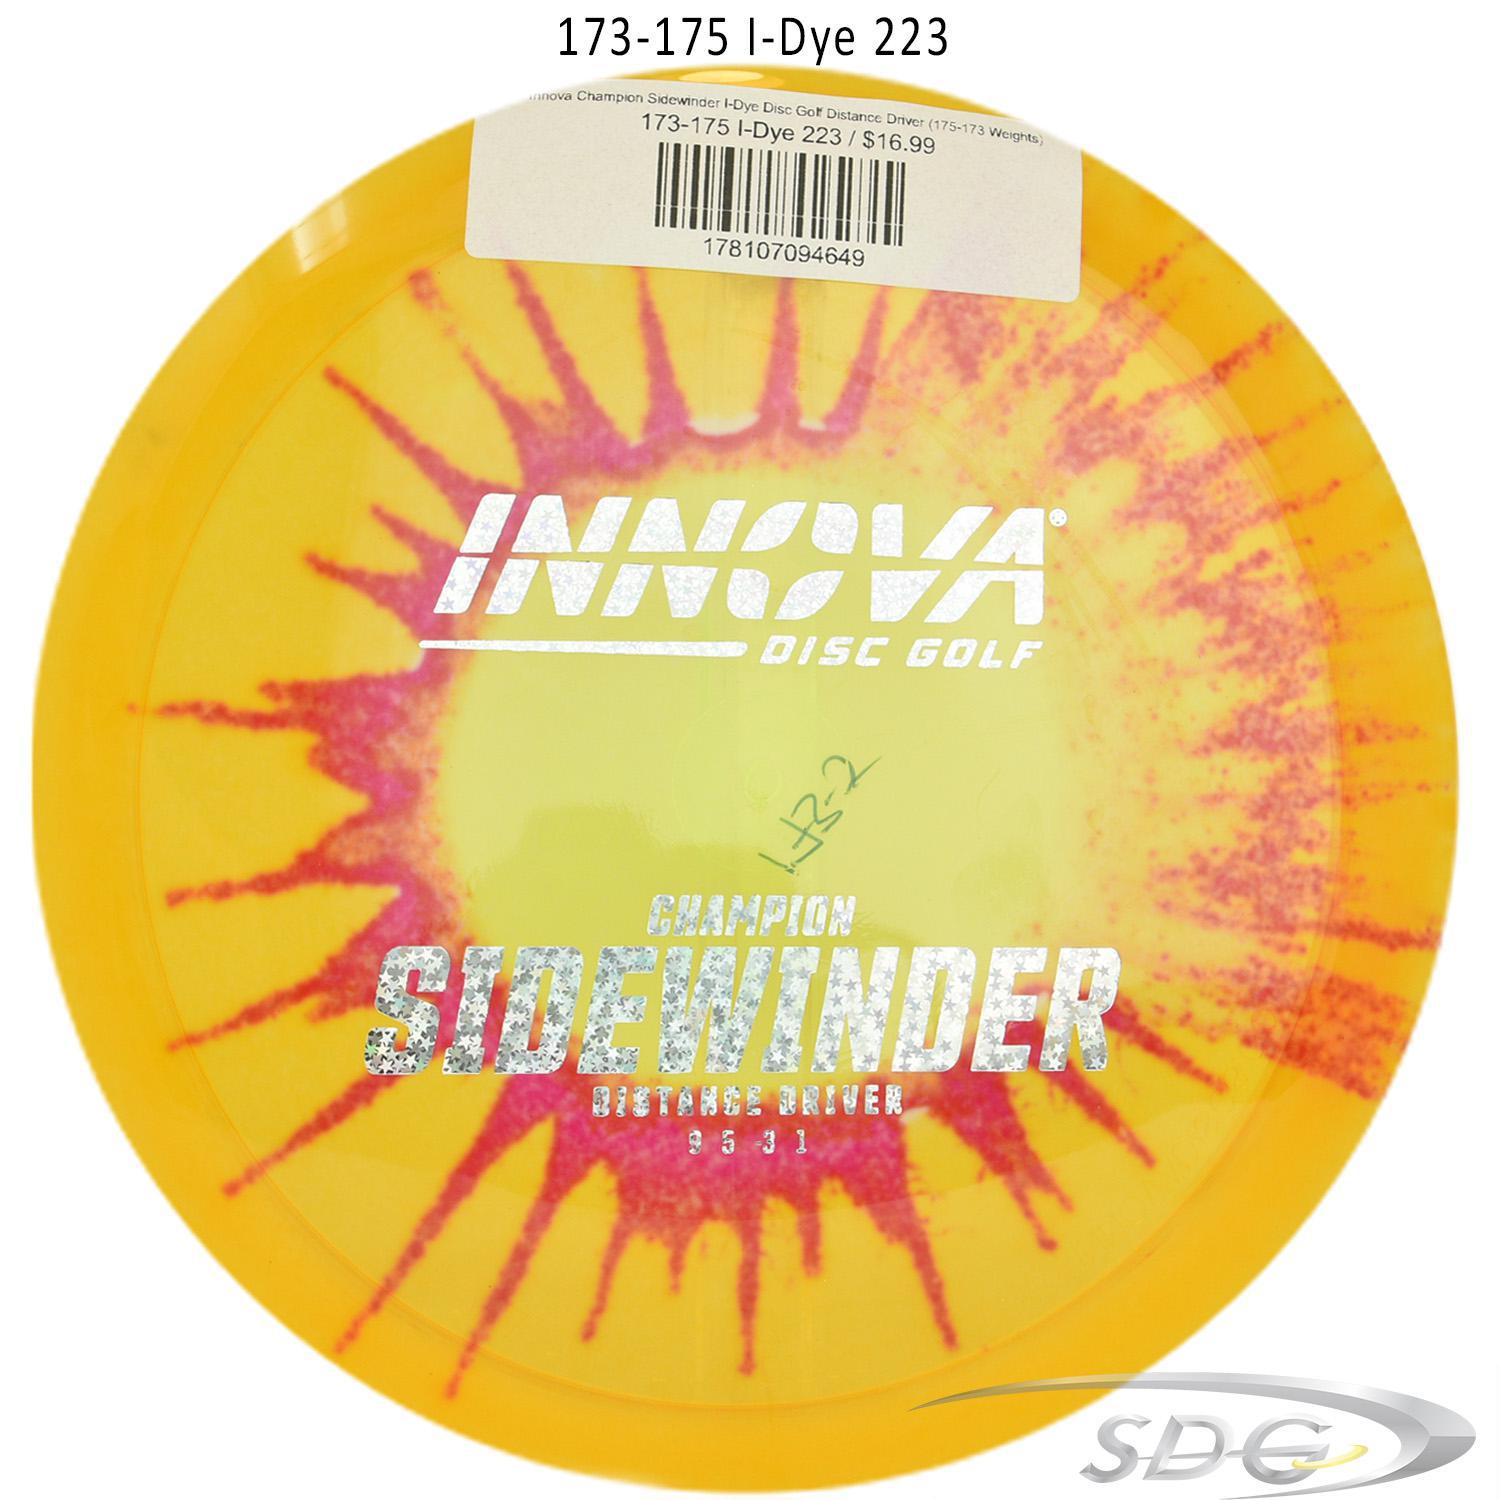 innova-champion-sidewinder-i-dye-disc-golf-distance-driver 173-175 I-Dye 223 